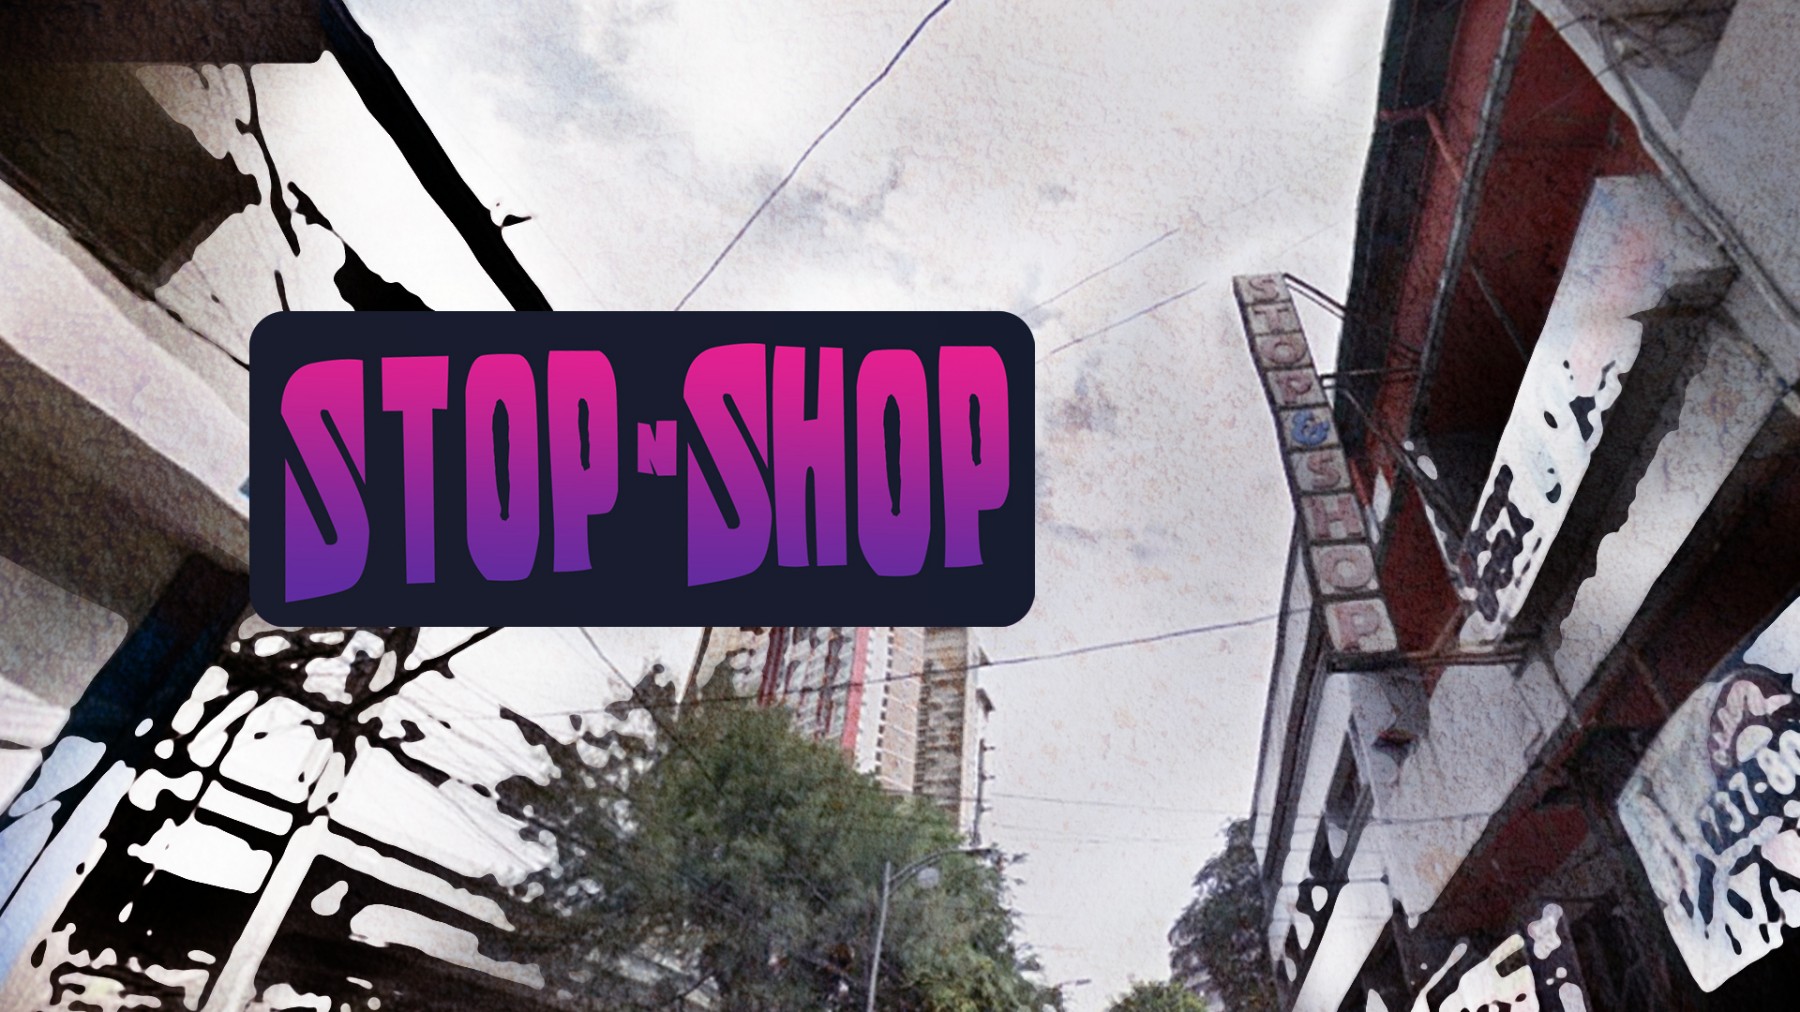 The story behind Sta. Mesa, Manila’s ‘Stop & Shop’